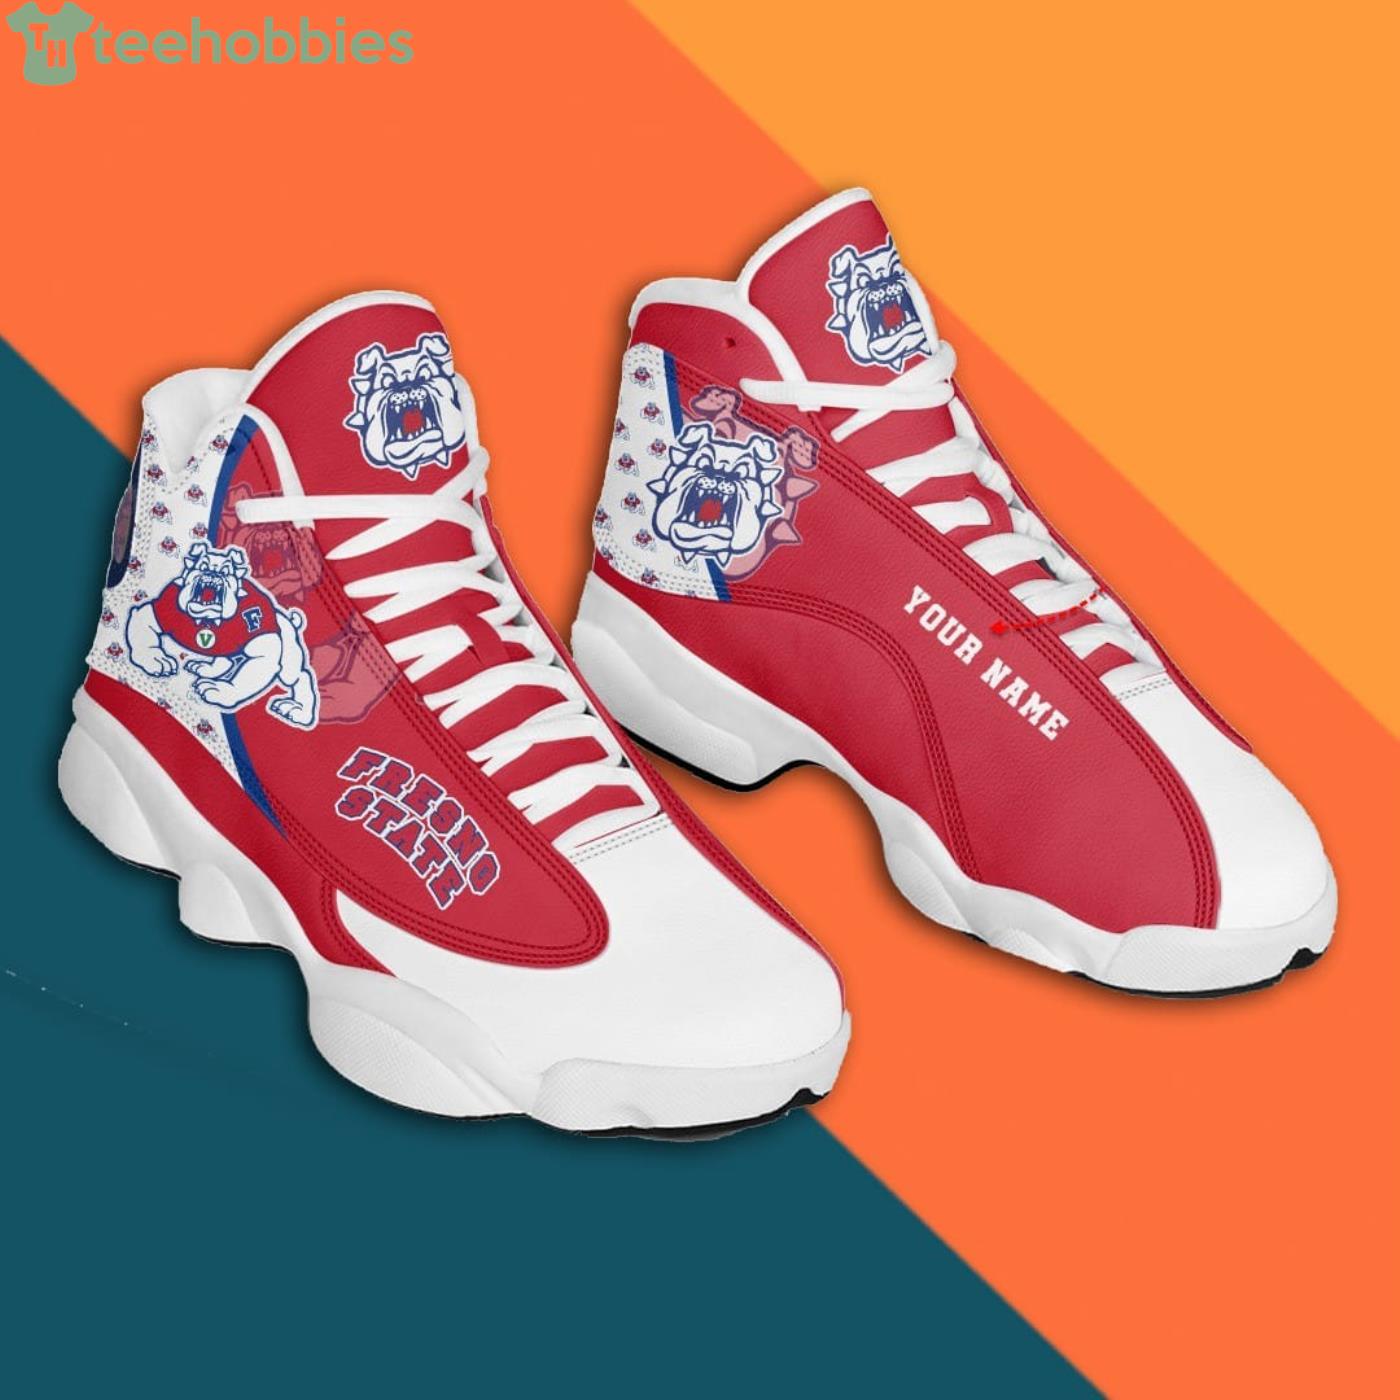 Louisville Cardinals Football Personalized Name Air Jordan 13 Shoes Sneaker  For Fans - Banantees